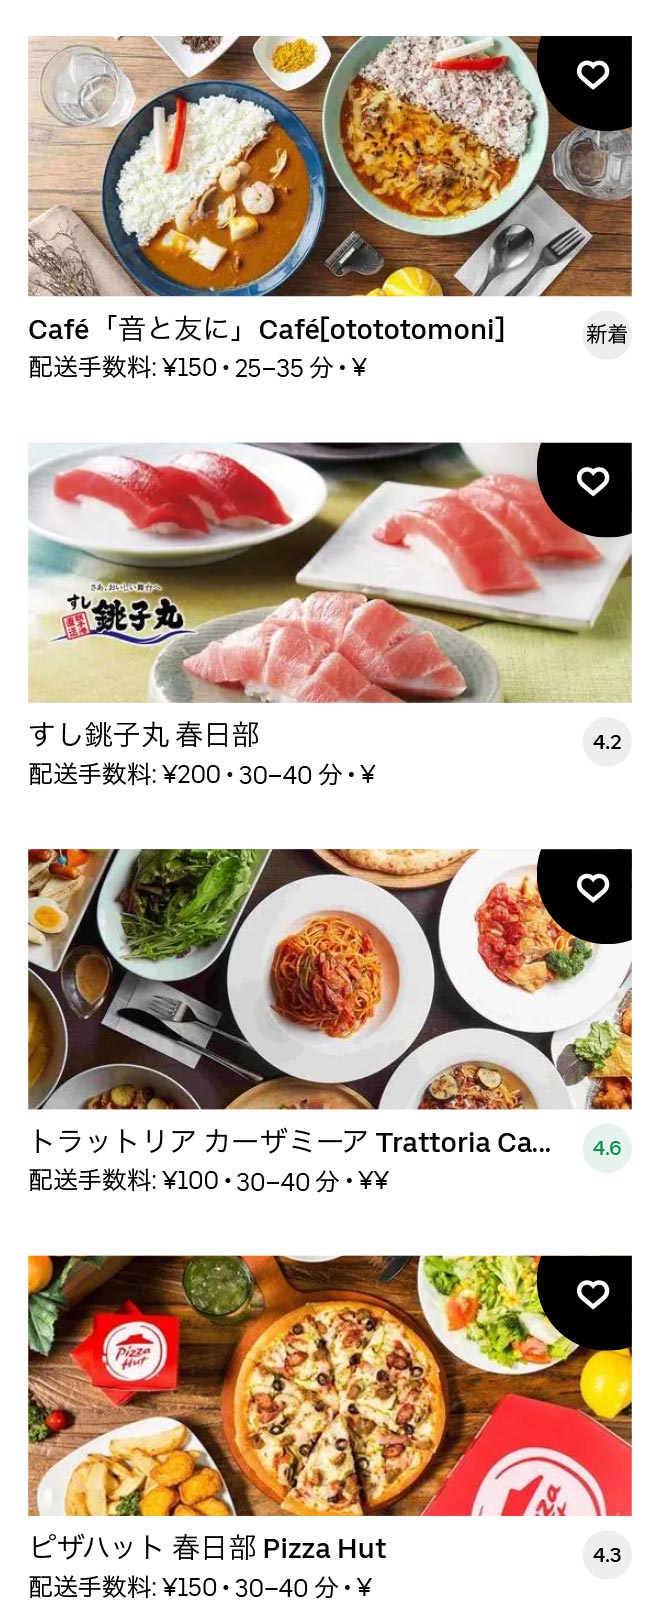 Kasukabe menu 2101 08